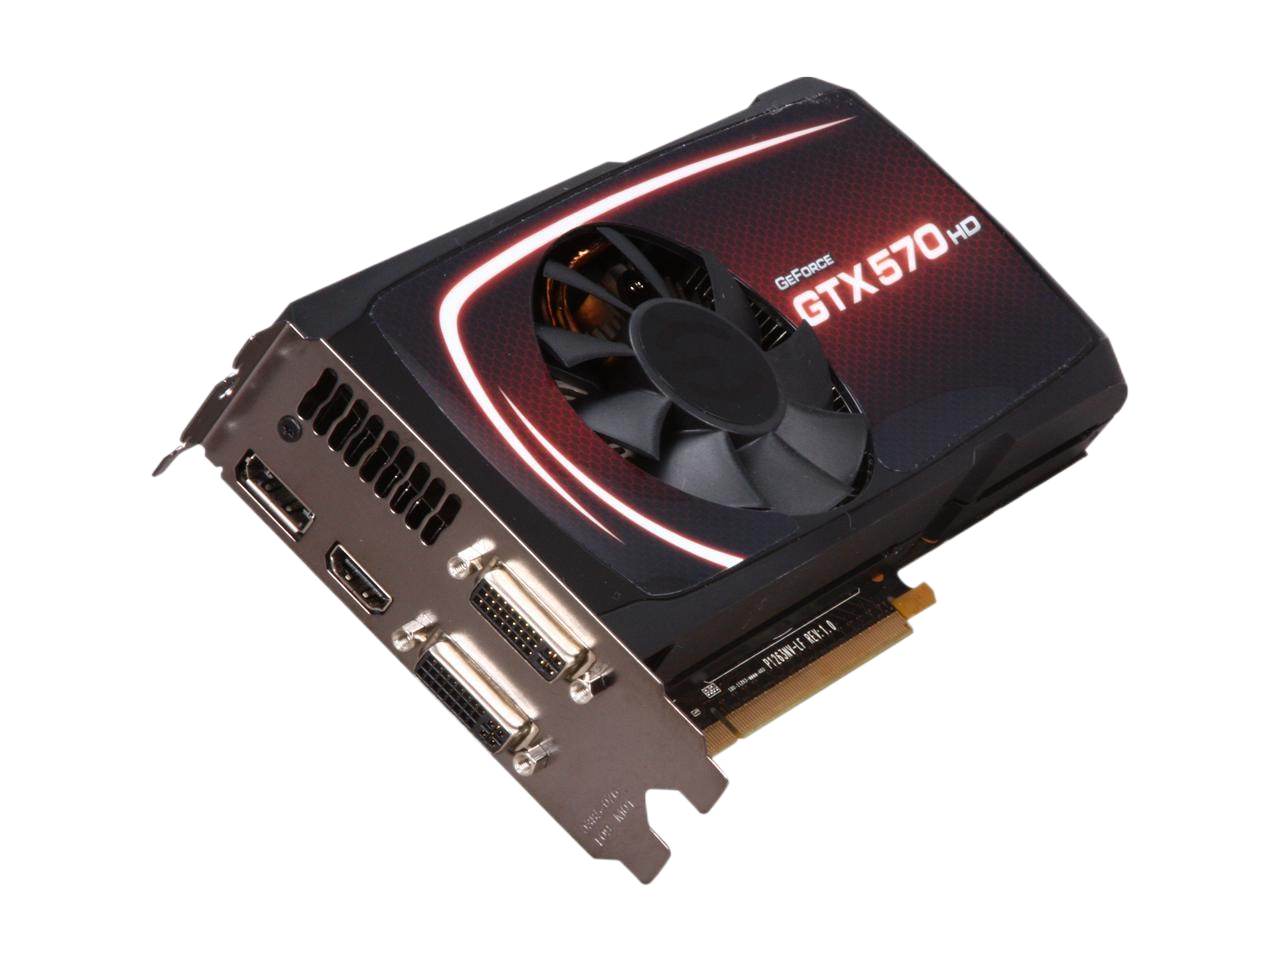 EVGA GeForce GTX 570 HD 2560MB 320-bit GDDR5 PCI Express 2.0 x16 HDCP Ready SLI Support Video Card 025-P3-1579-AR